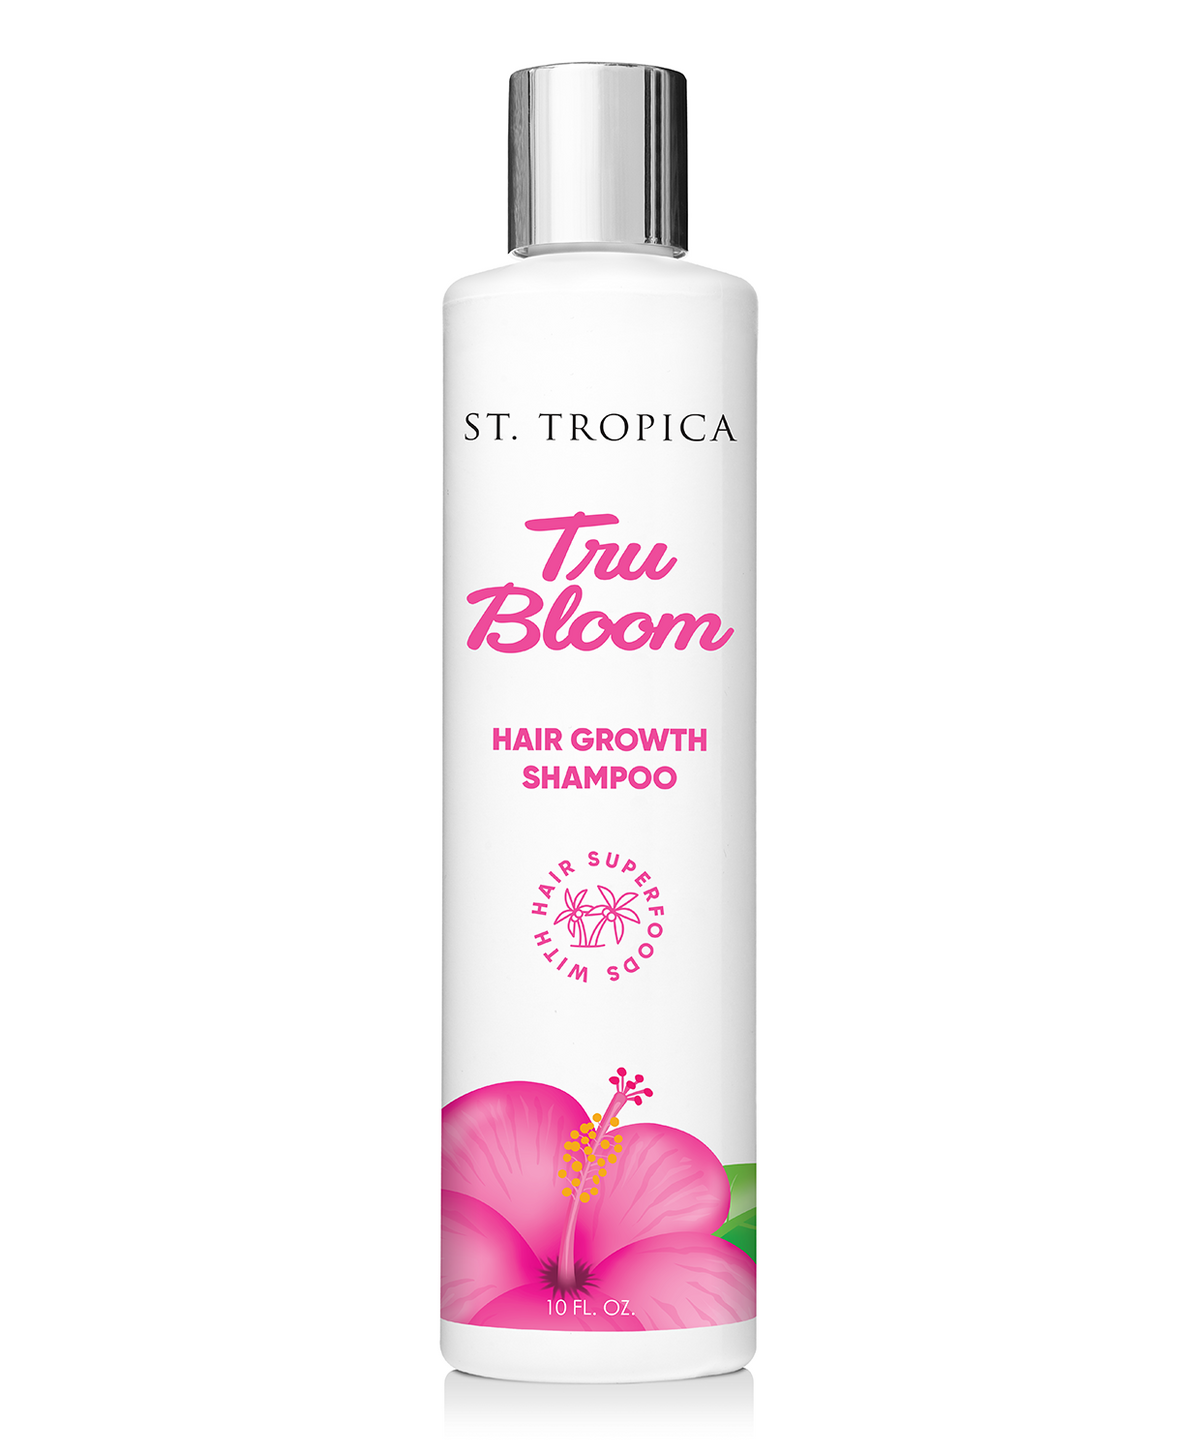 ST. TROPICA Tru Bloom 3-Step Hair Growth System